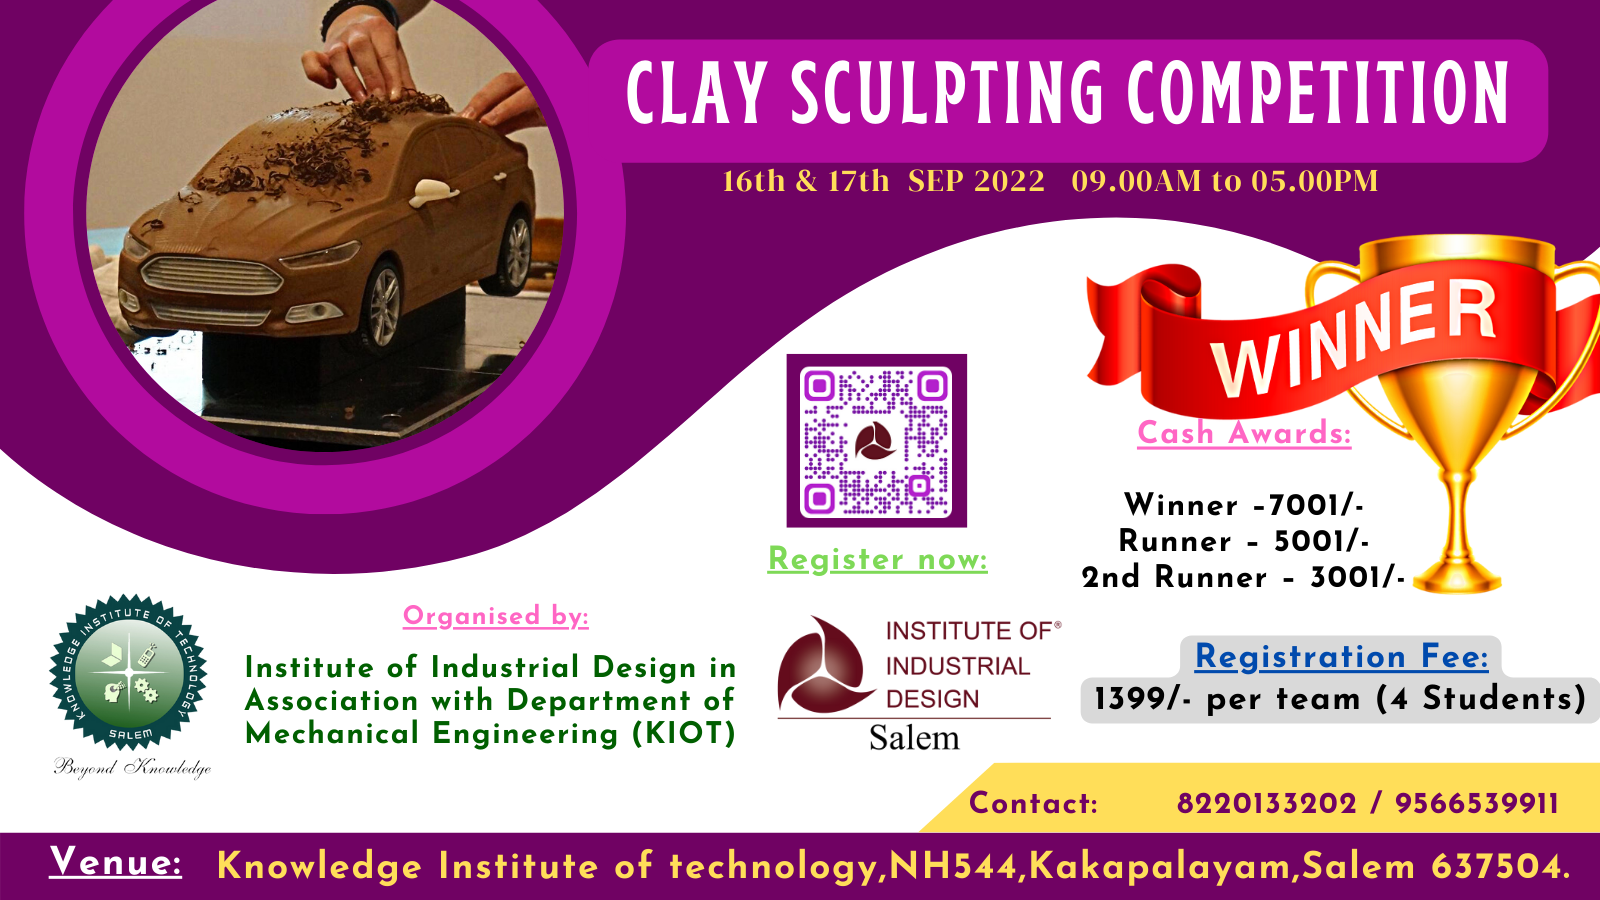 Clay Sculpting Competiton 2022